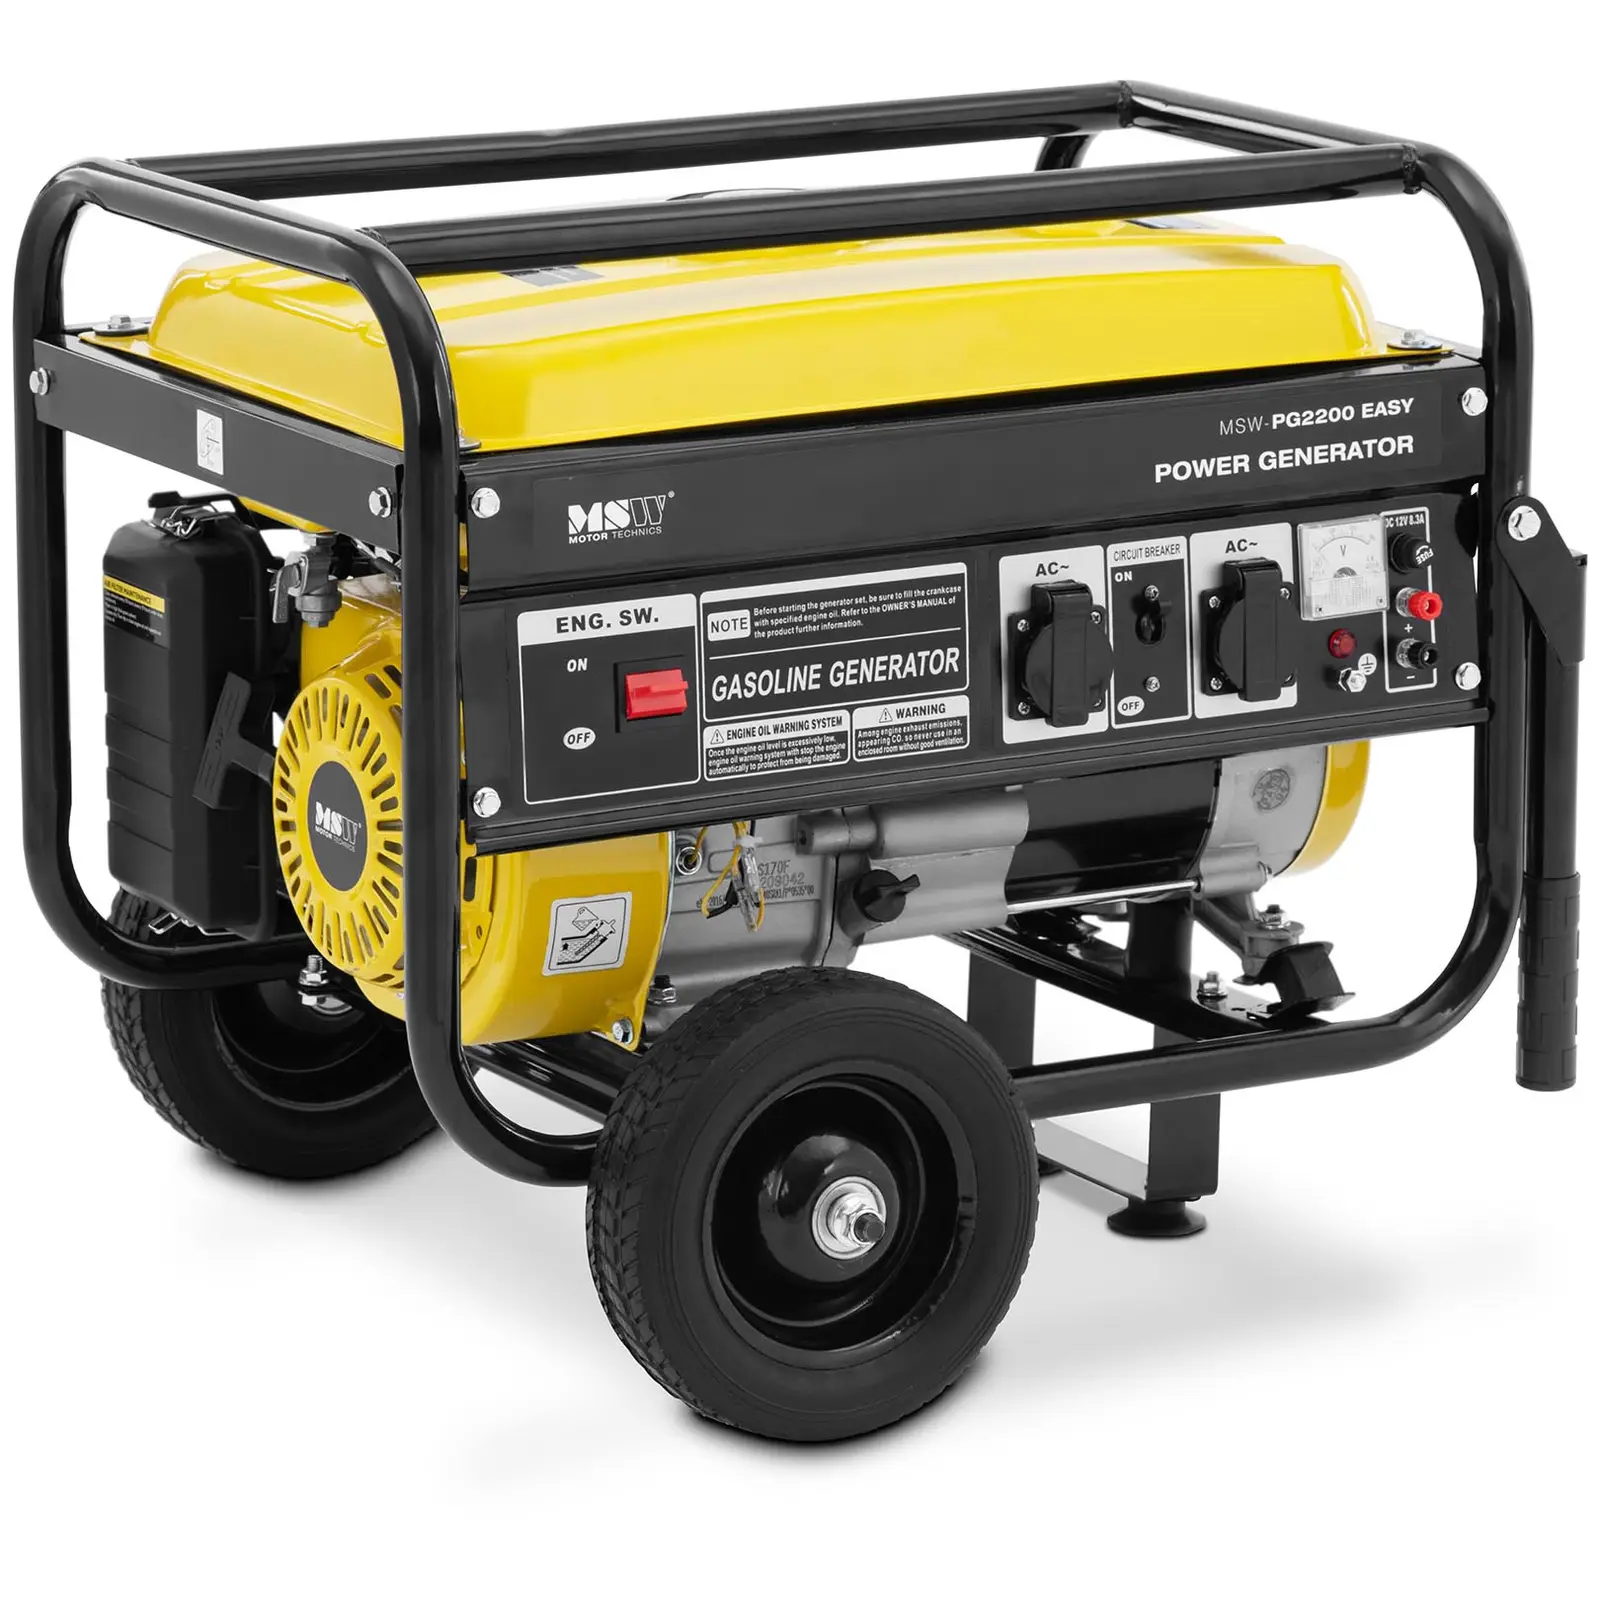 Benzino generatorius – 2200 W – 230 V AC / 12 V DC – rankinis paleidimas / elektra